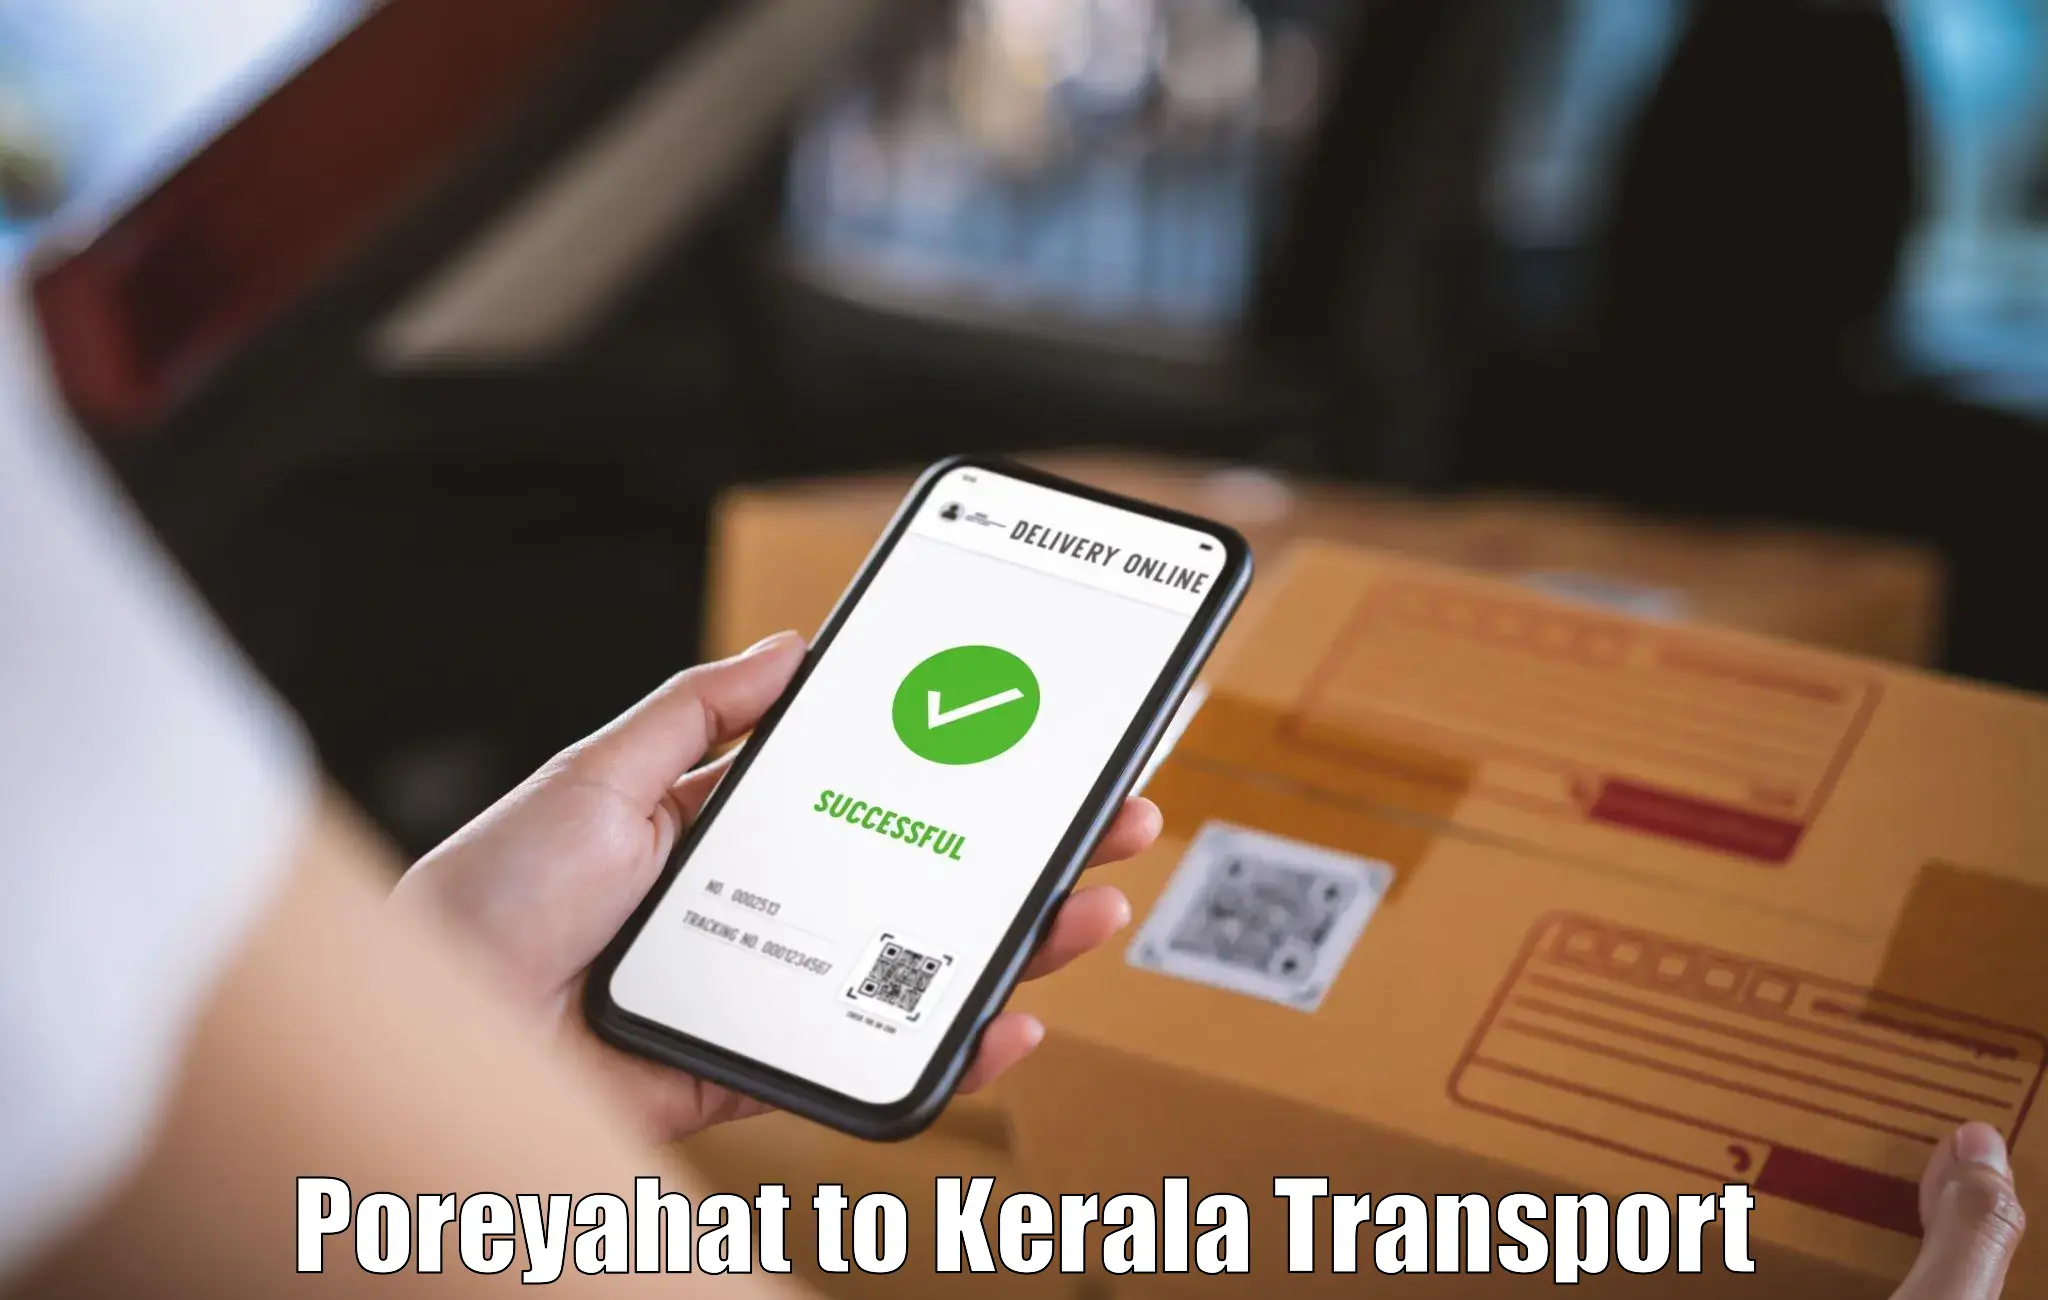 Daily transport service Poreyahat to Kattappana